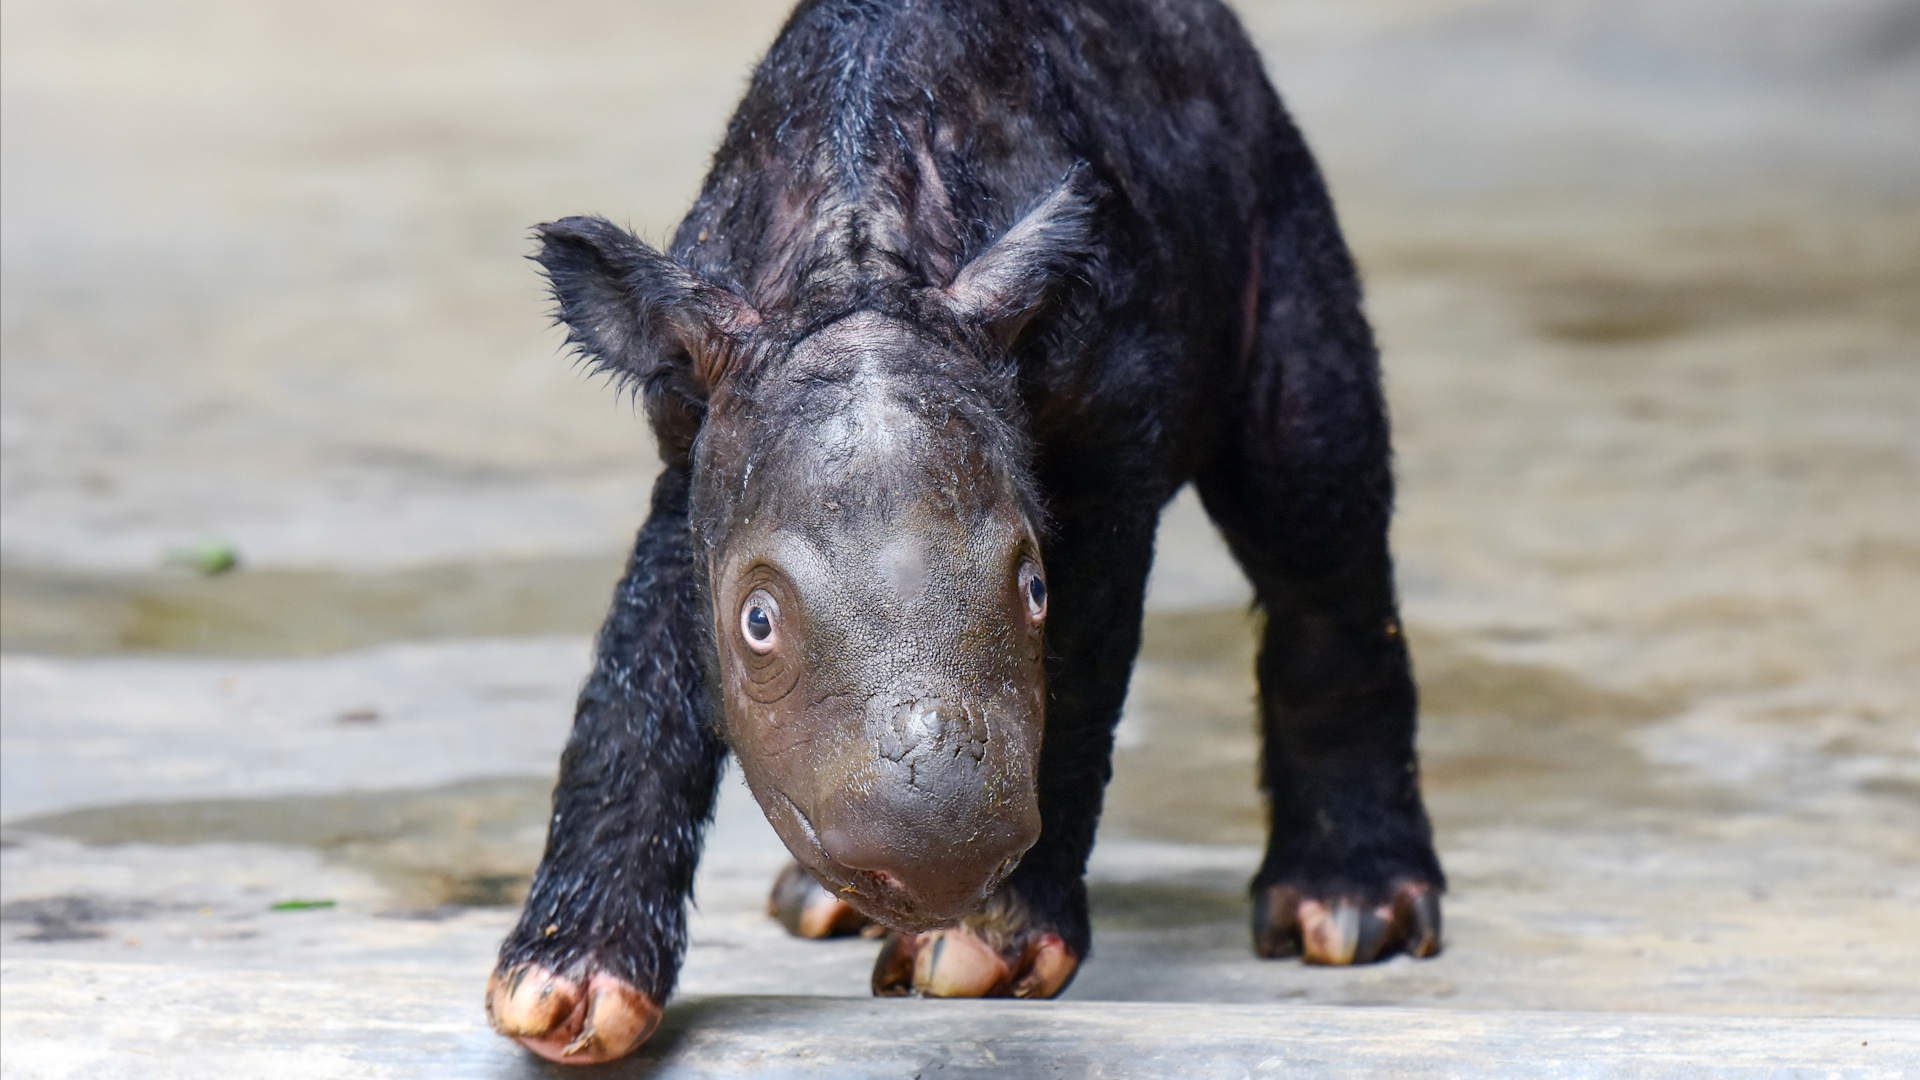 Endangered Sumatran rhinoceros gives birth to a new calf - The